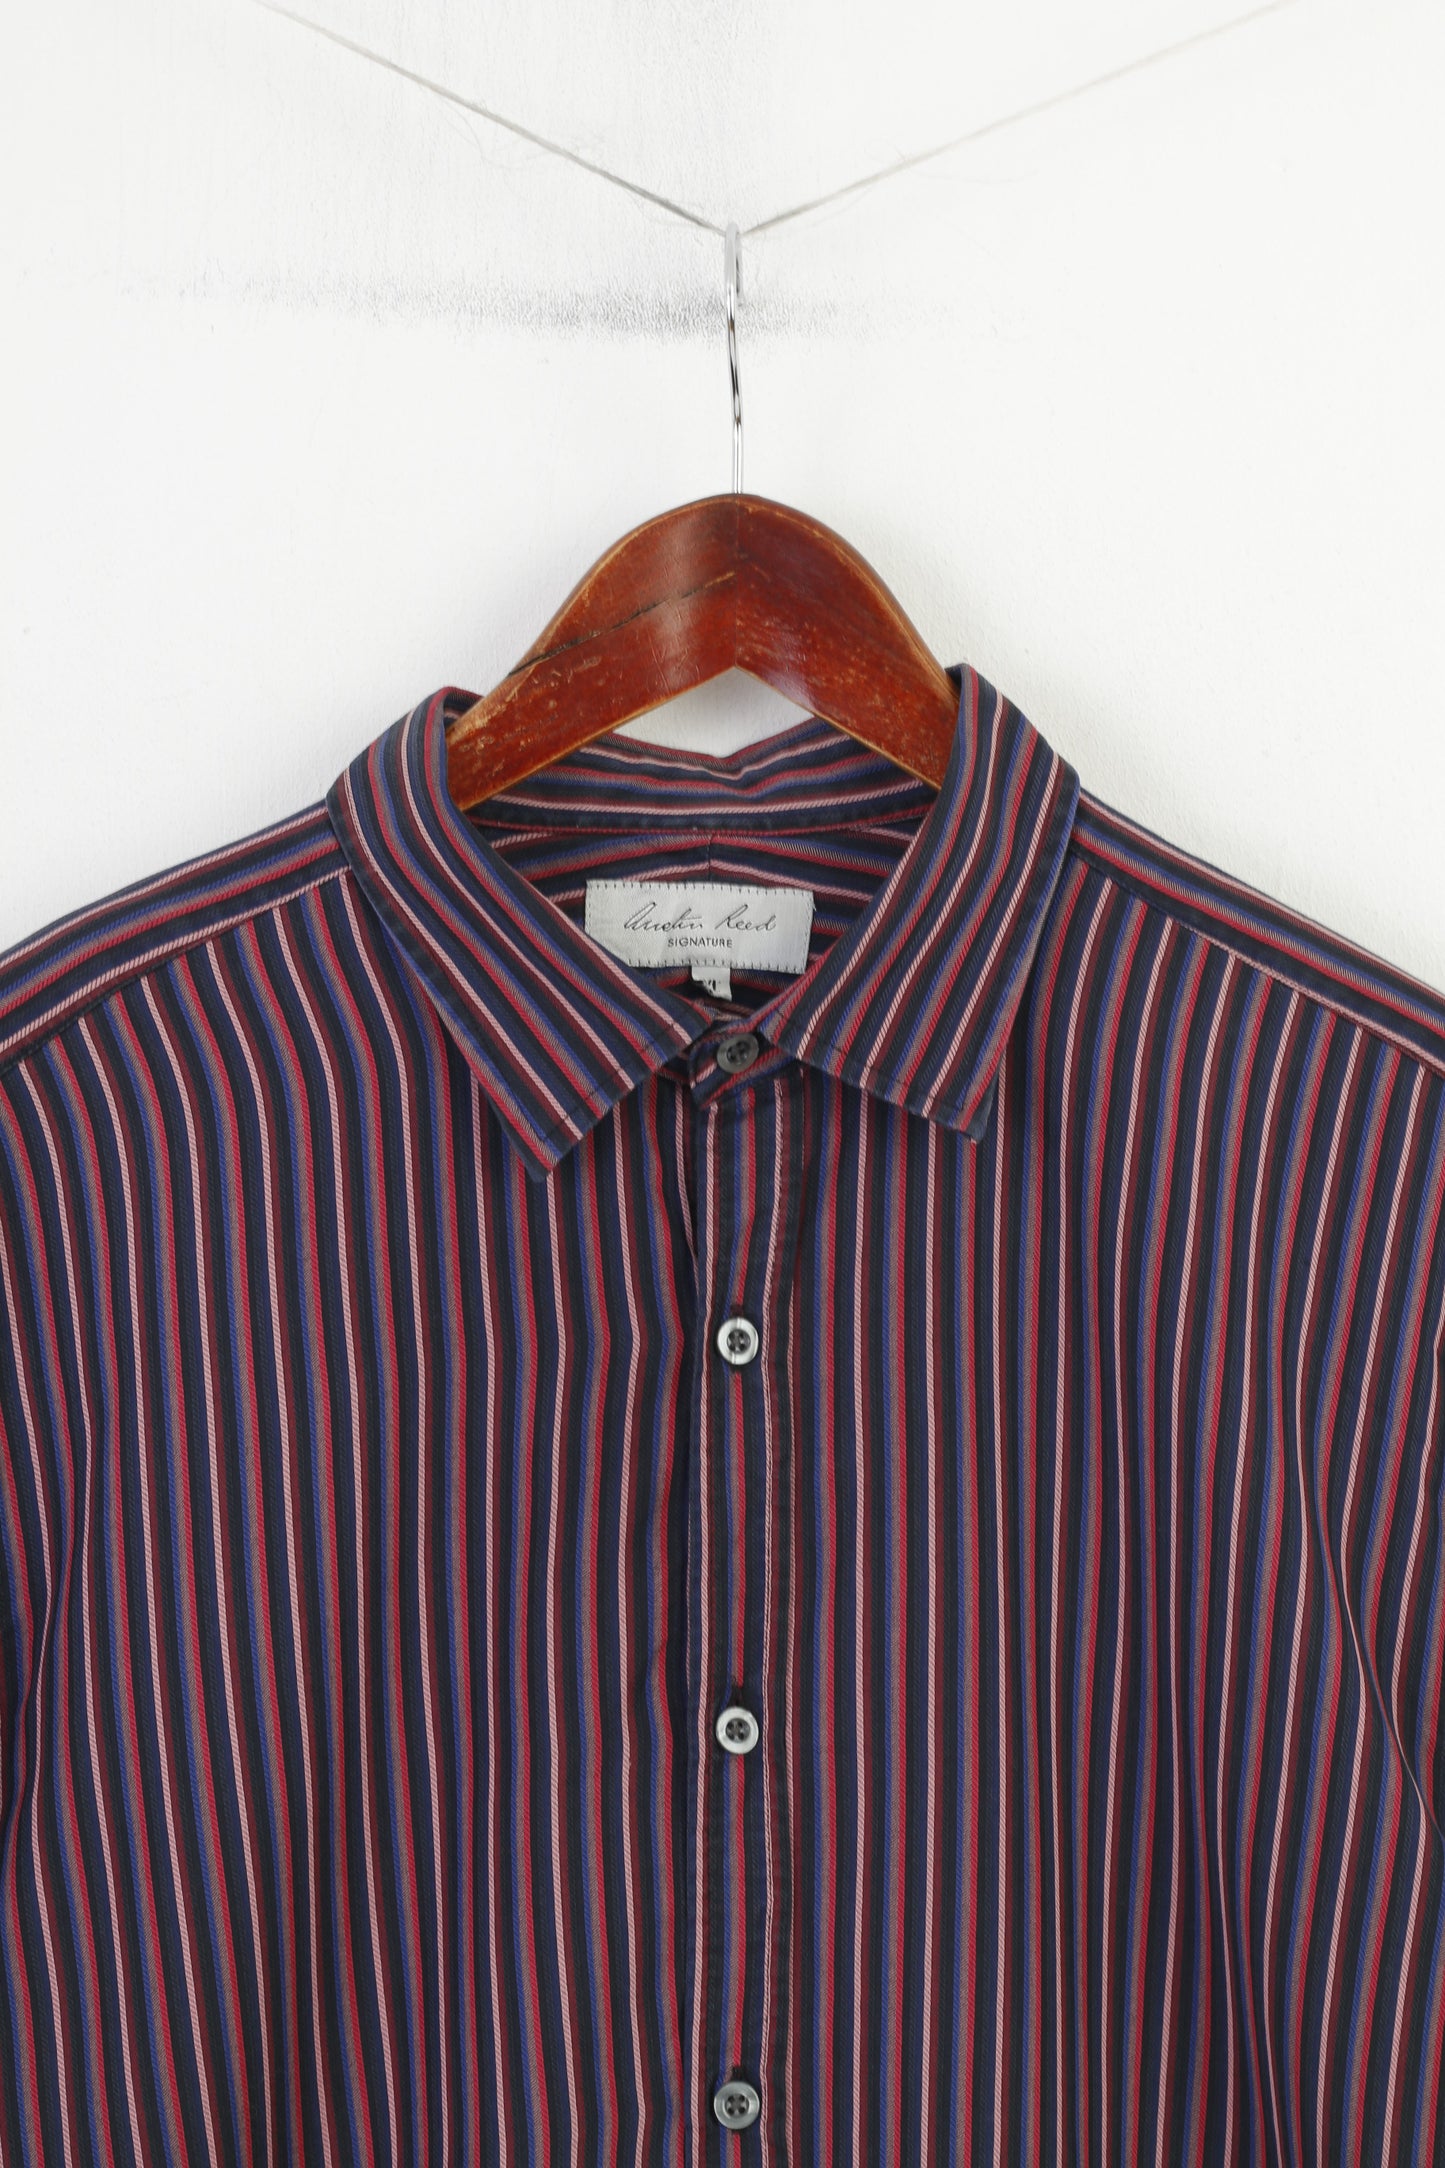 Austin Reed Signature Men XL L Casual Shirt Purple Striped Cotton Italian Fabric Long Sleeve Top